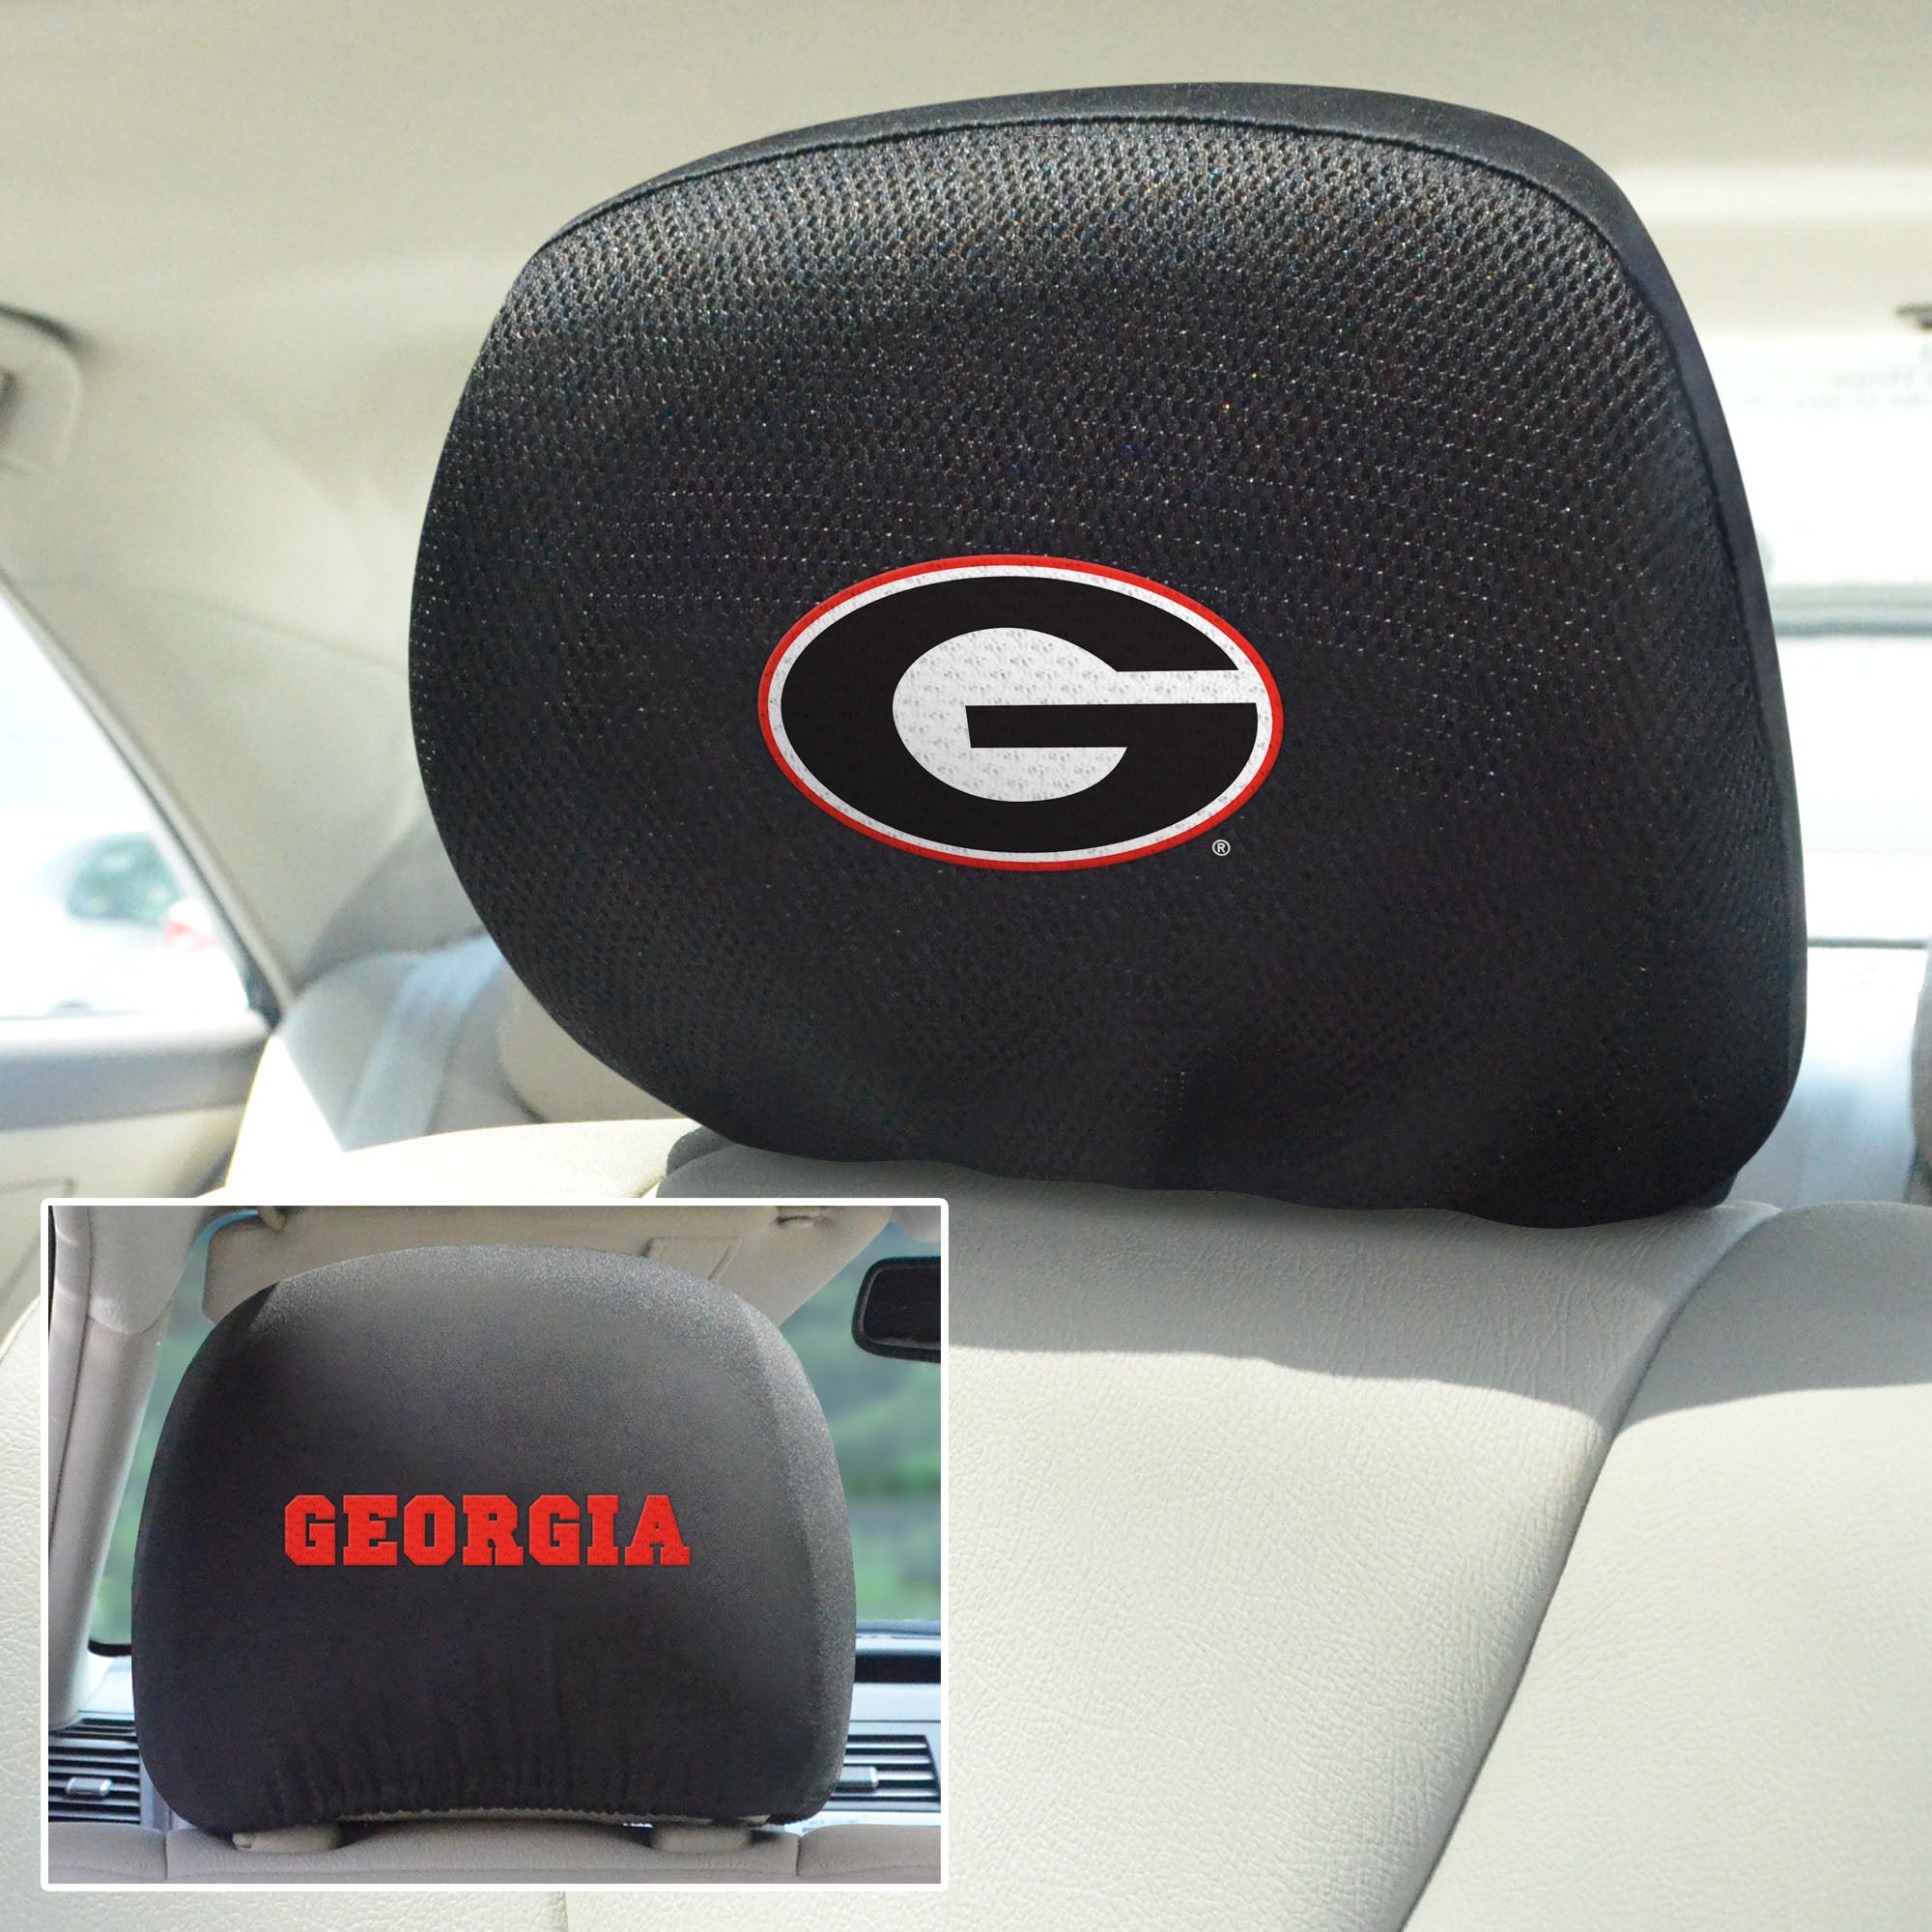 Georgia Bulldogs Set of 2 Headrest Covers